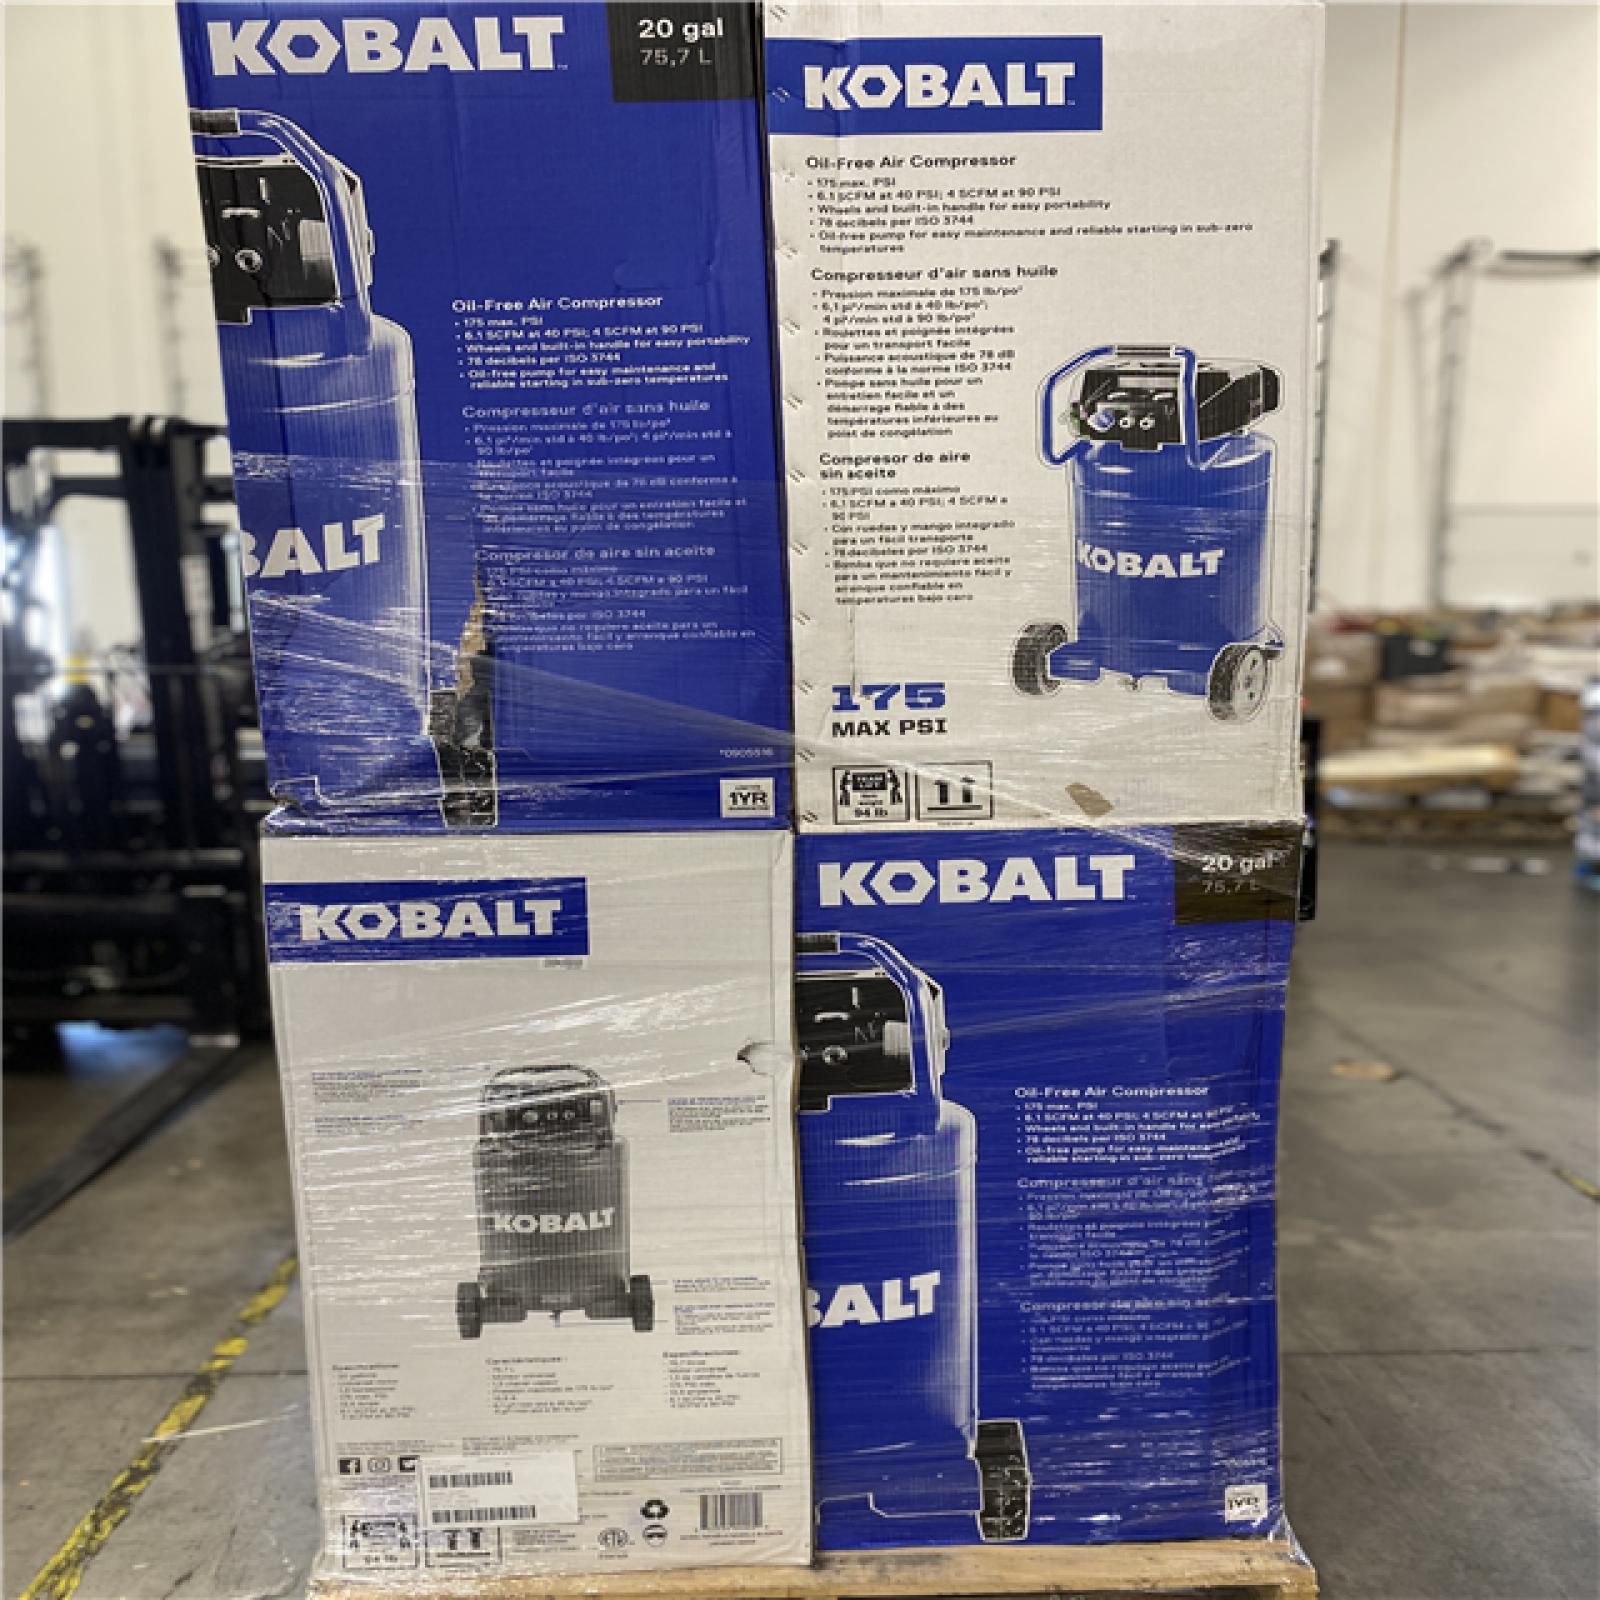 DALLAS LOCATION - Kobalt 20-Gallon Portable Electric 175 PSI Vertical Air Compressor PALLET - (8 UNITS)